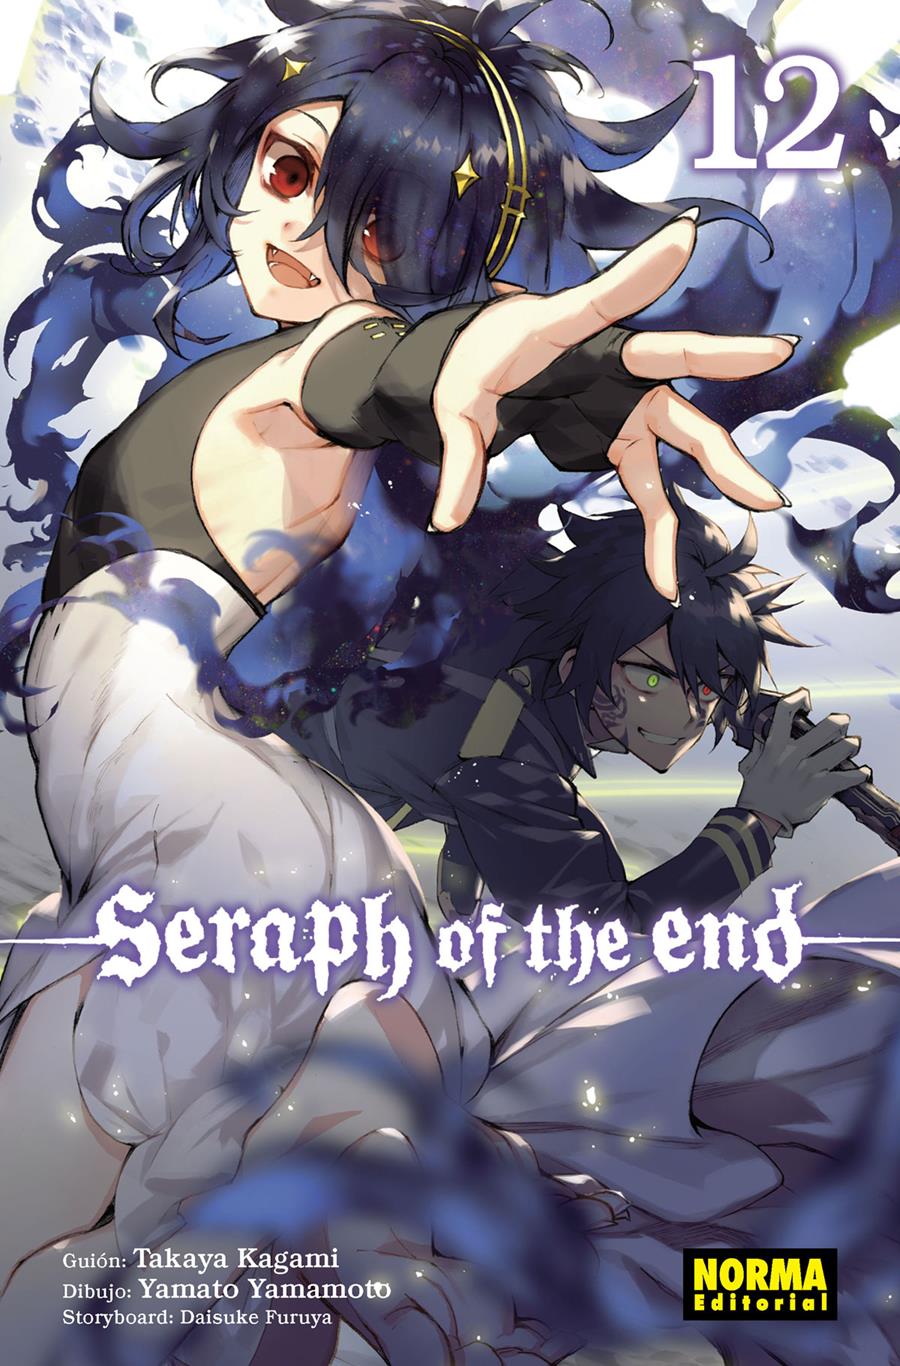 Seraph of the End 12 | N1018-NOR37 | Takaya Kagami, Yamato Yamamoto, Daisuke Furuma | Terra de Còmic - Tu tienda de cómics online especializada en cómics, manga y merchandising